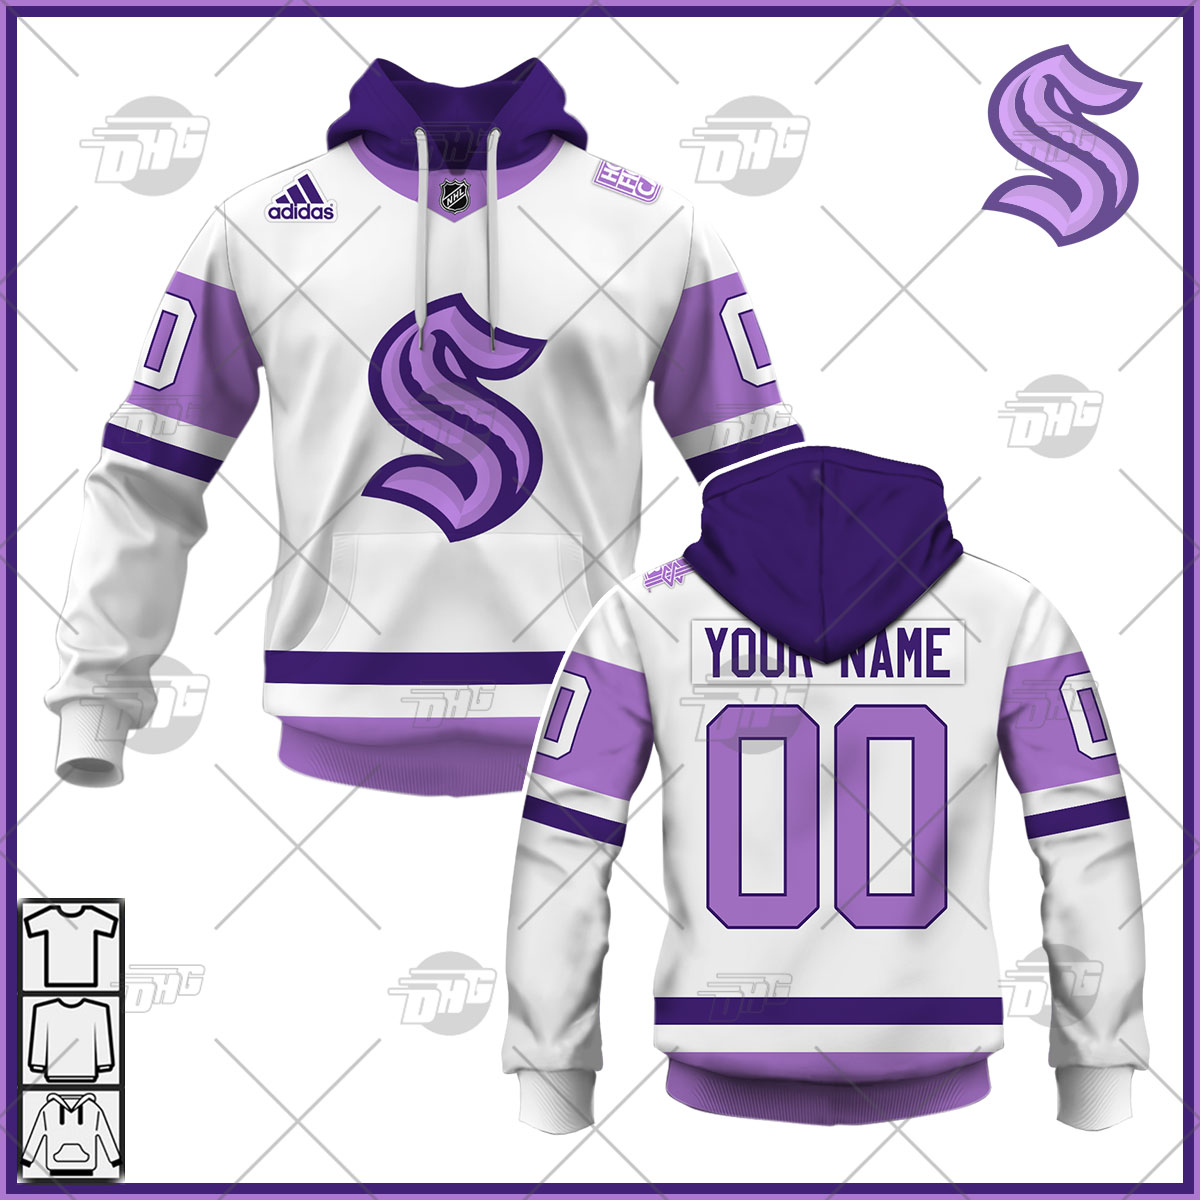 Men's Fanatics Branded White/Purple Colorado Avalanche 2021 Hockey